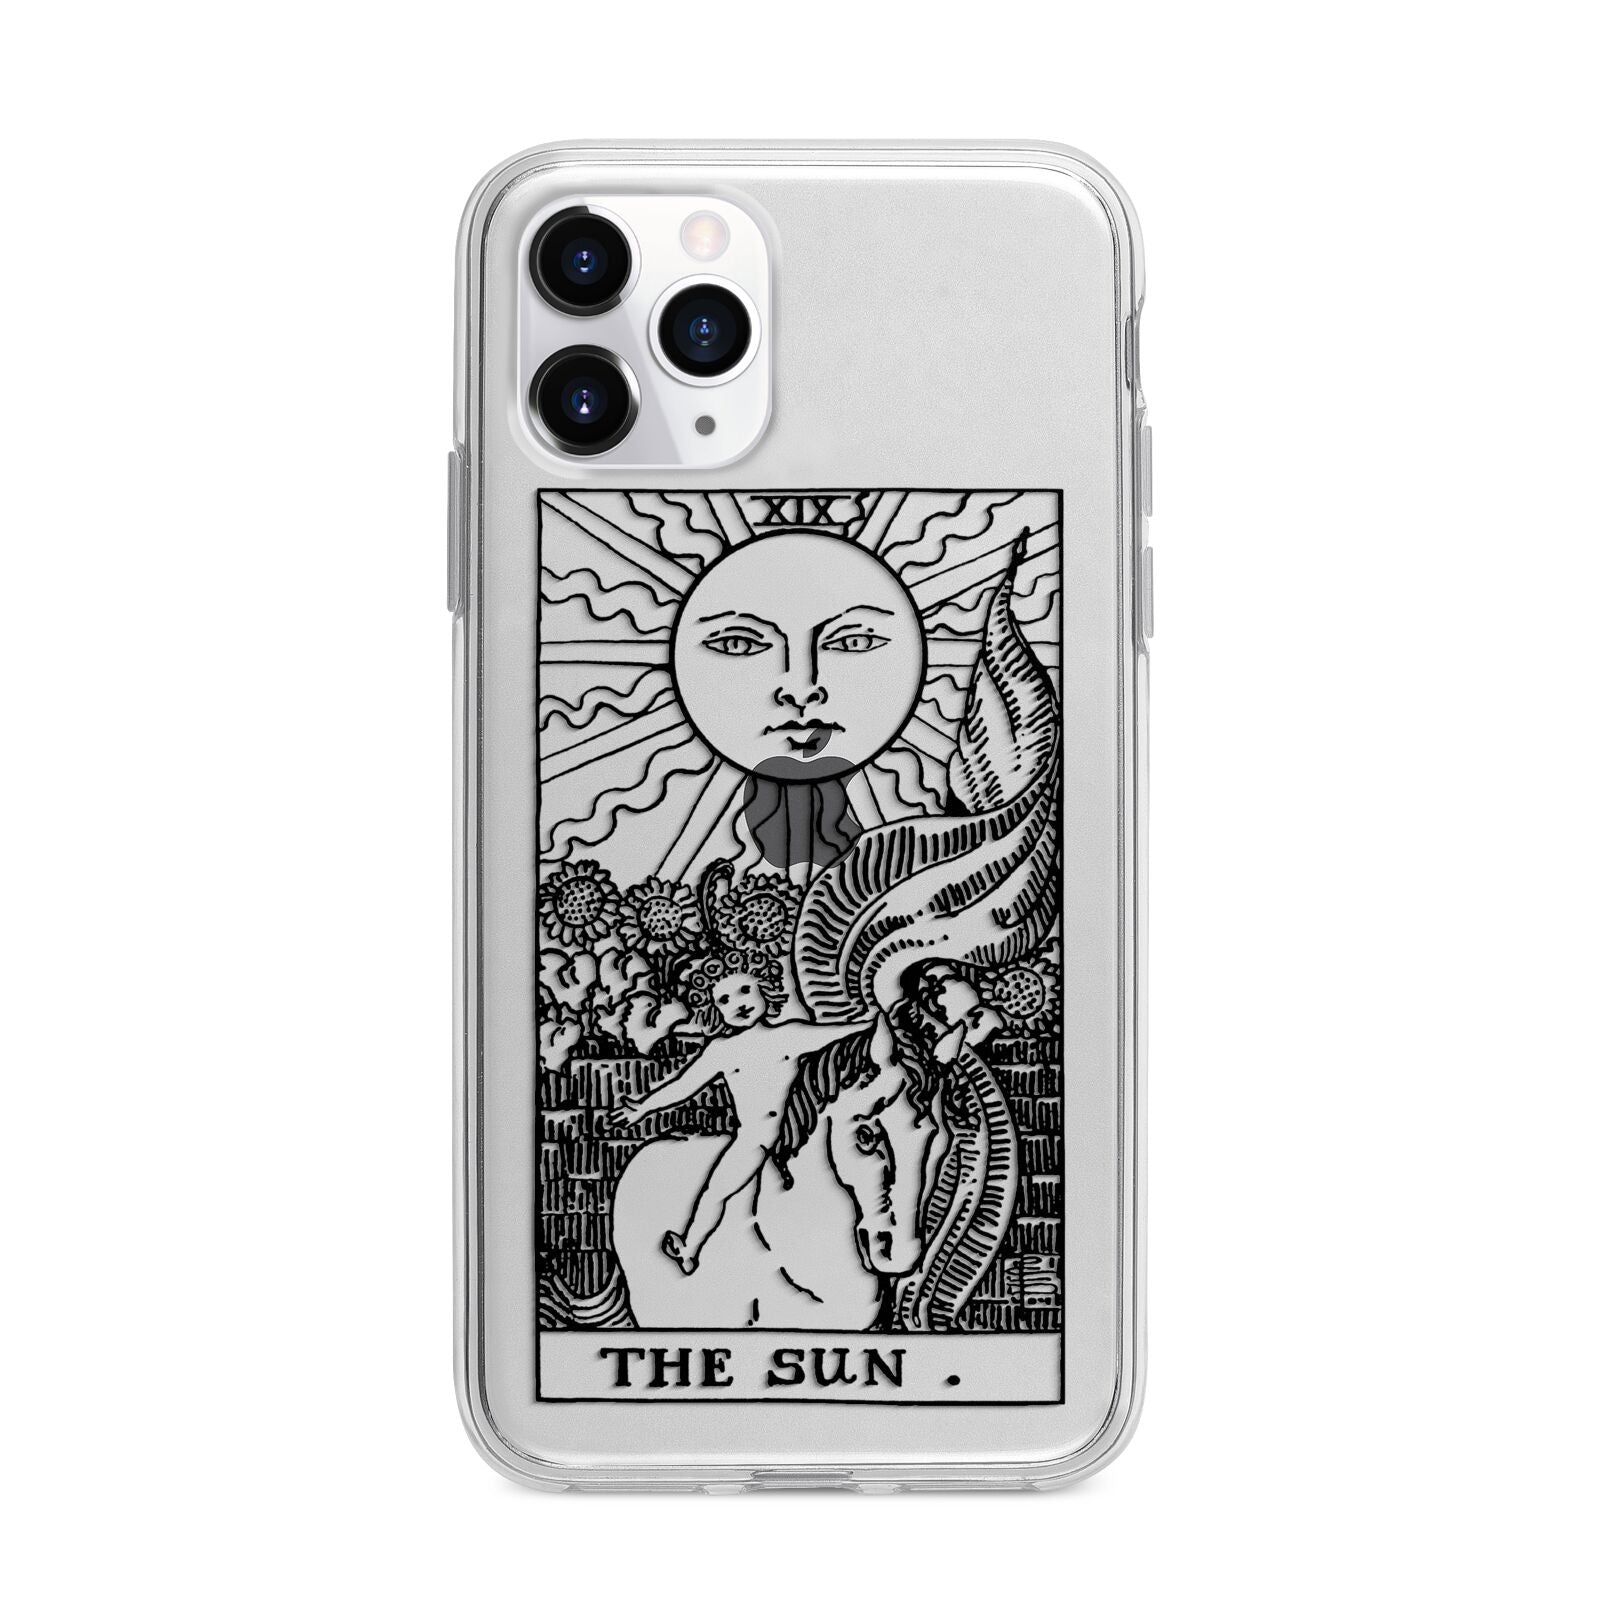 The Sun Monochrome Apple iPhone 11 Pro in Silver with Bumper Case